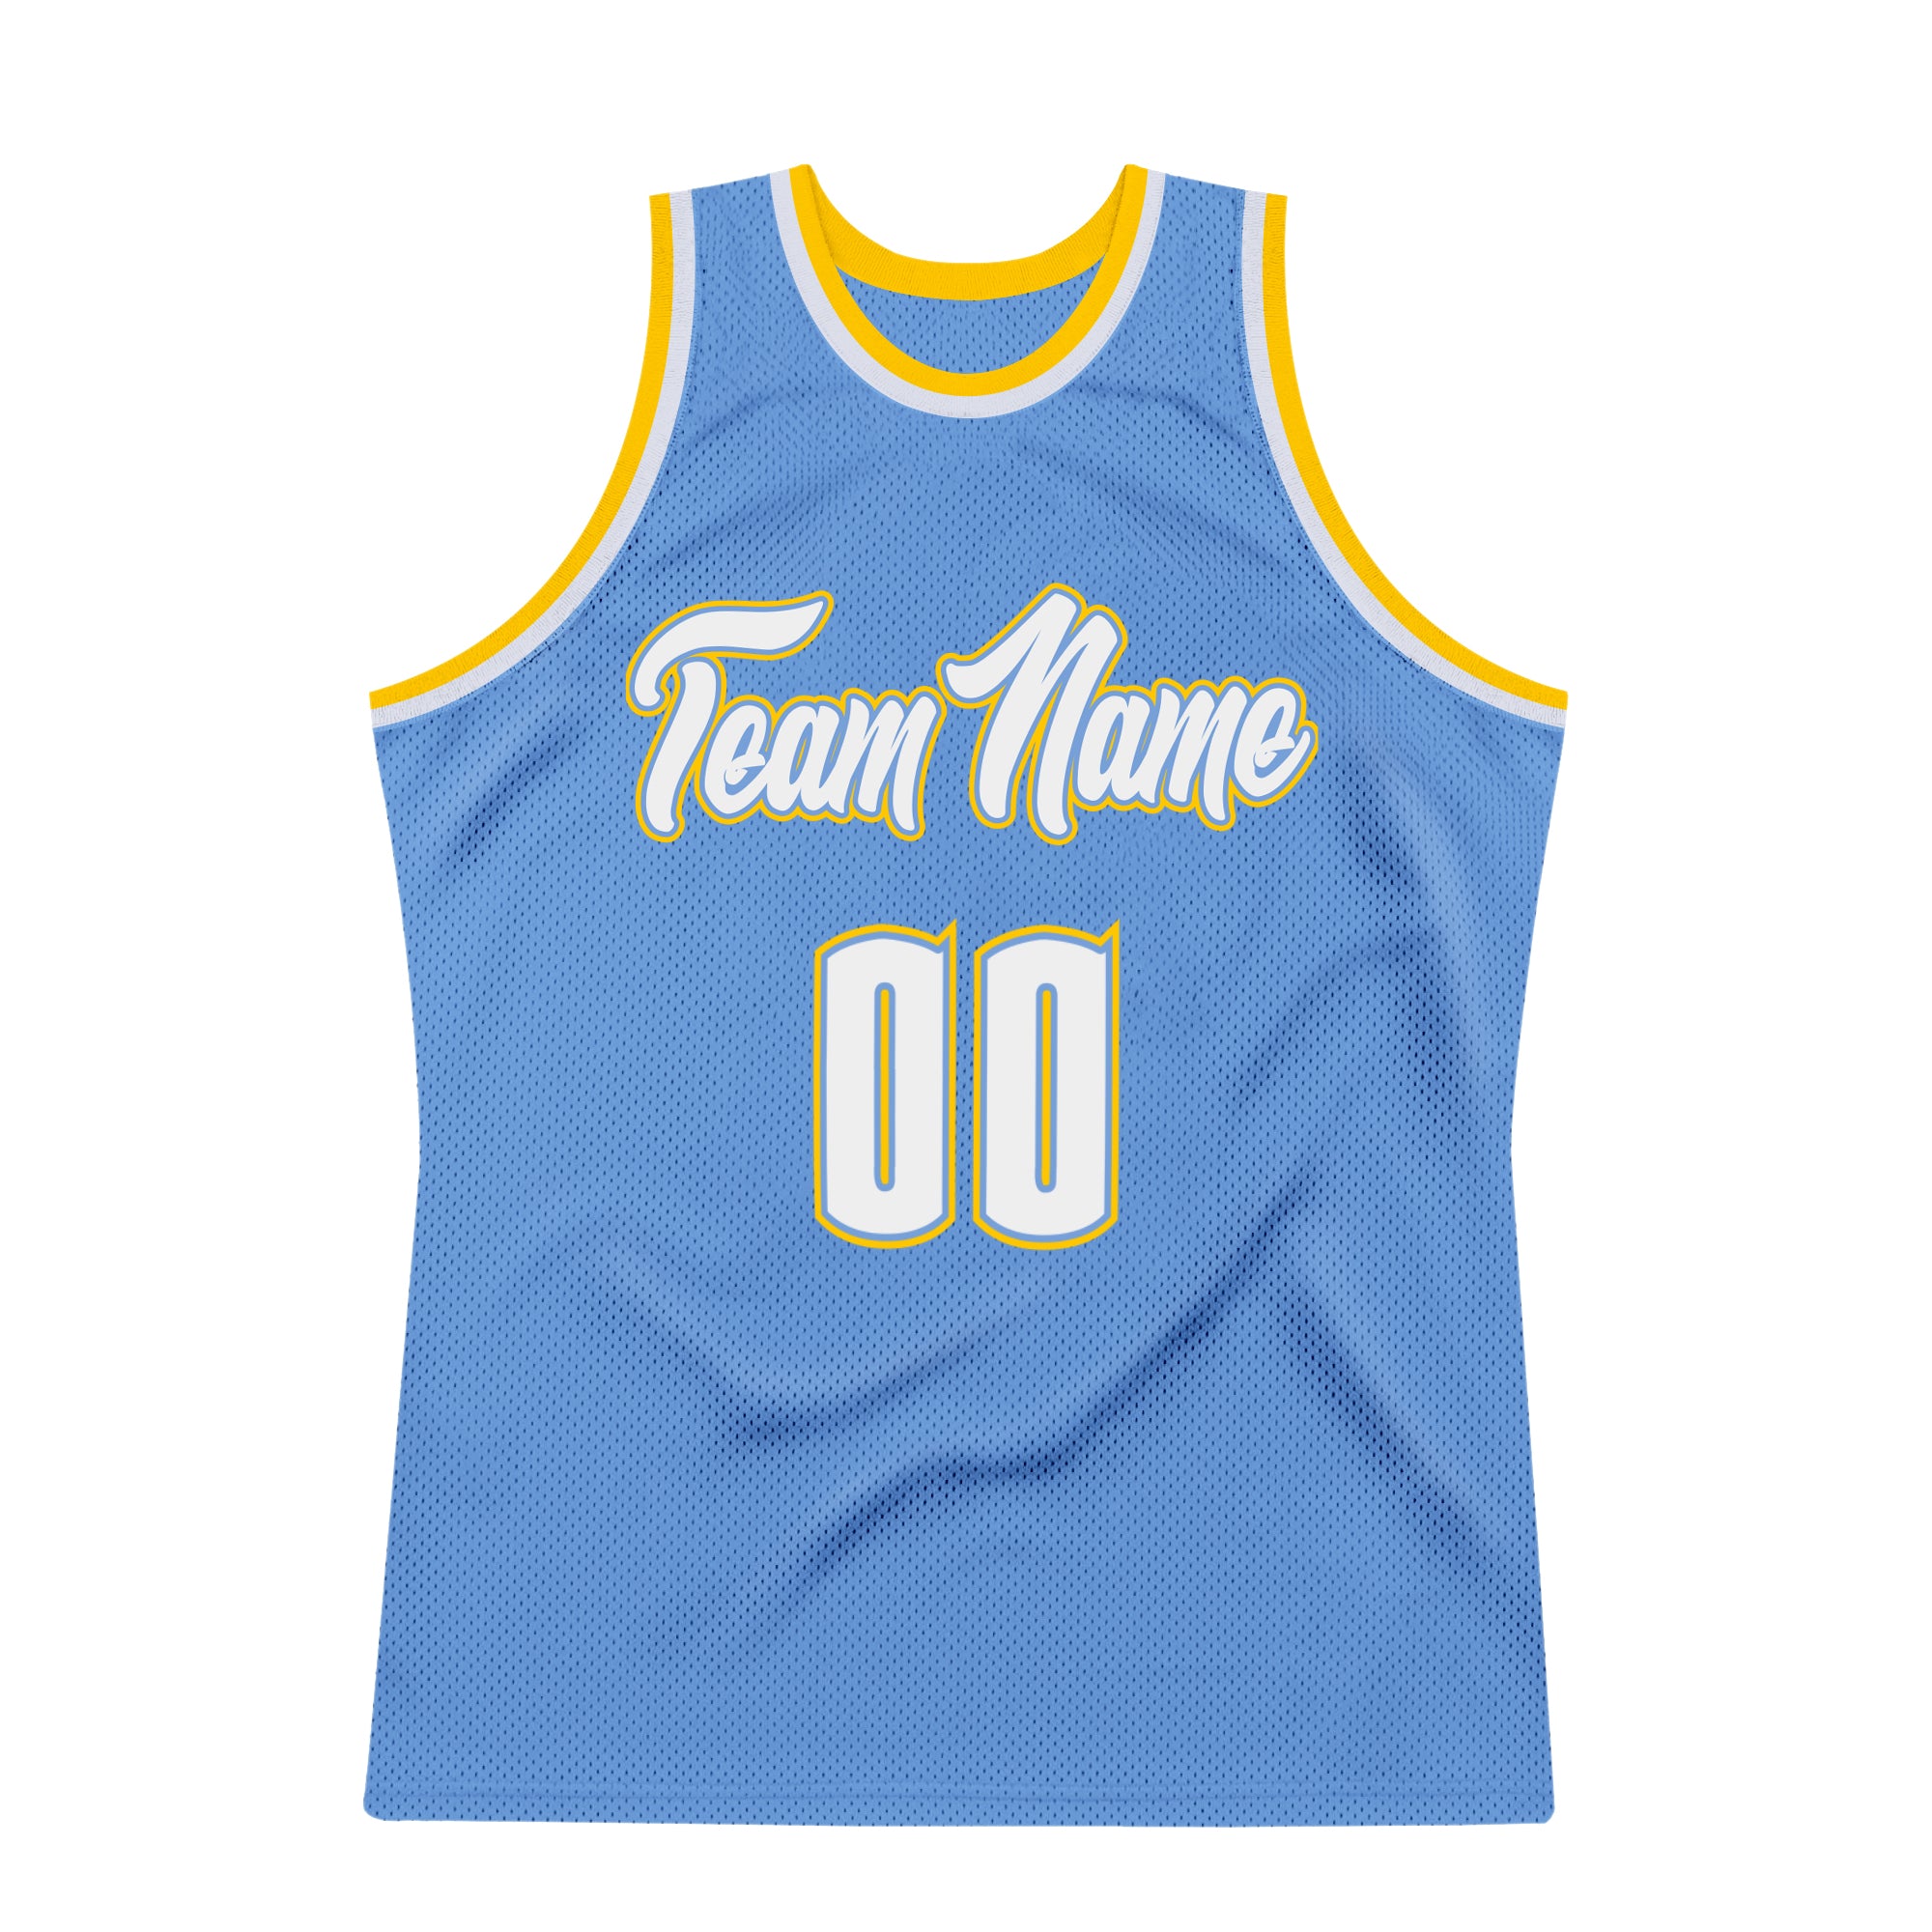 Custom Team Gold Basketball Teal Rib-Knit Jersey White